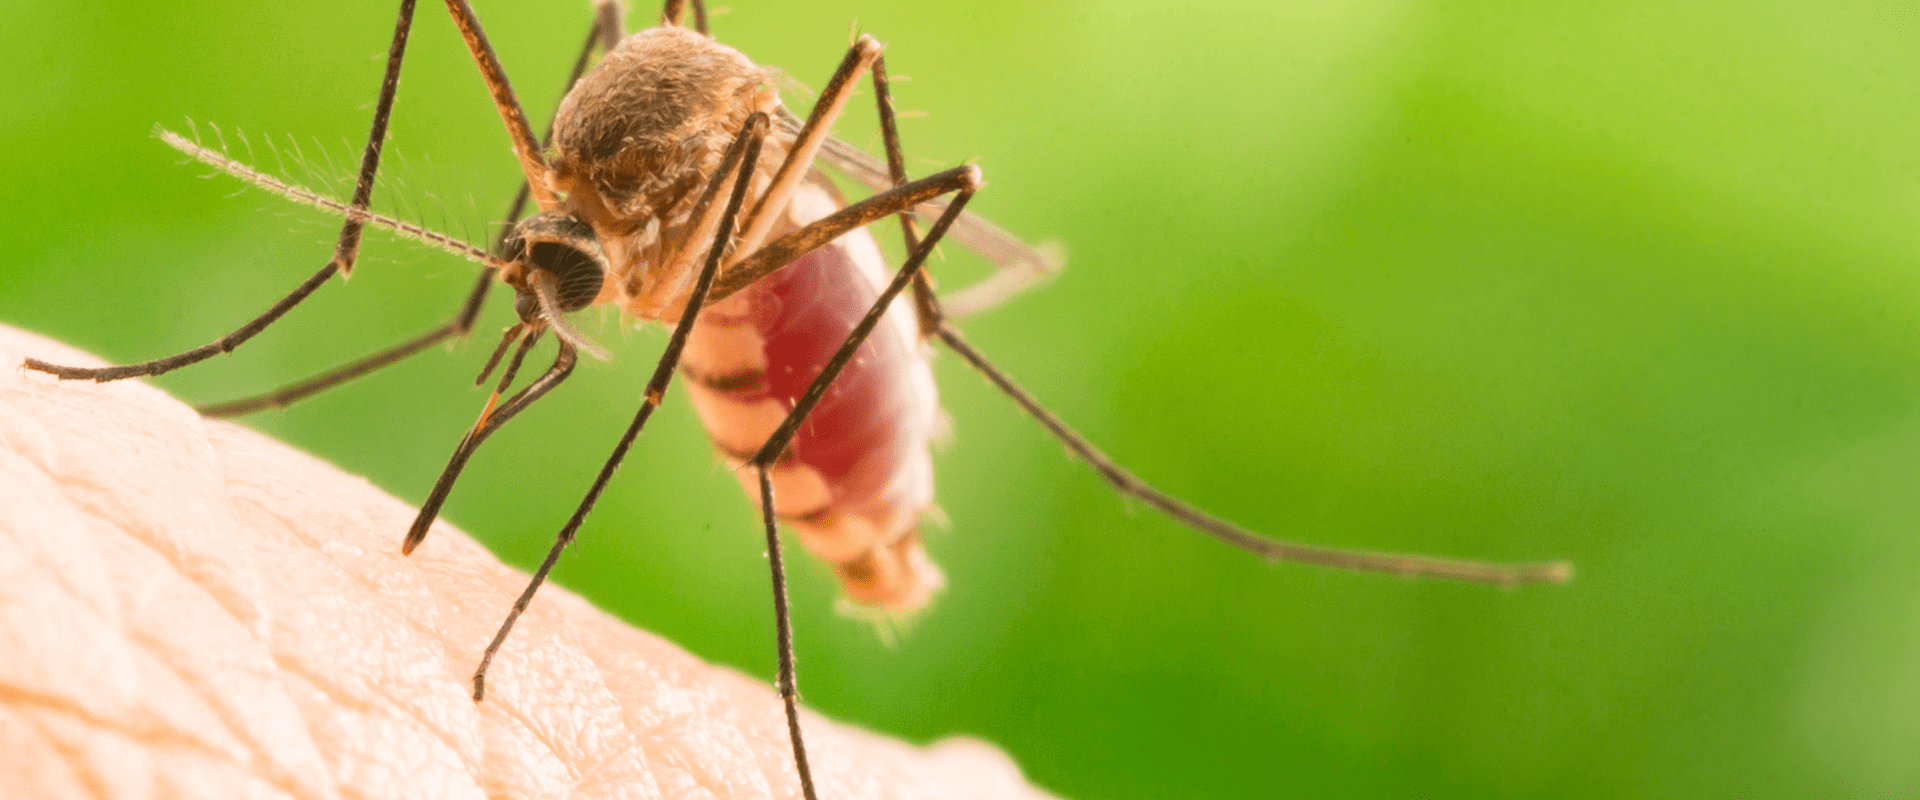 Maryland Mosquito Control